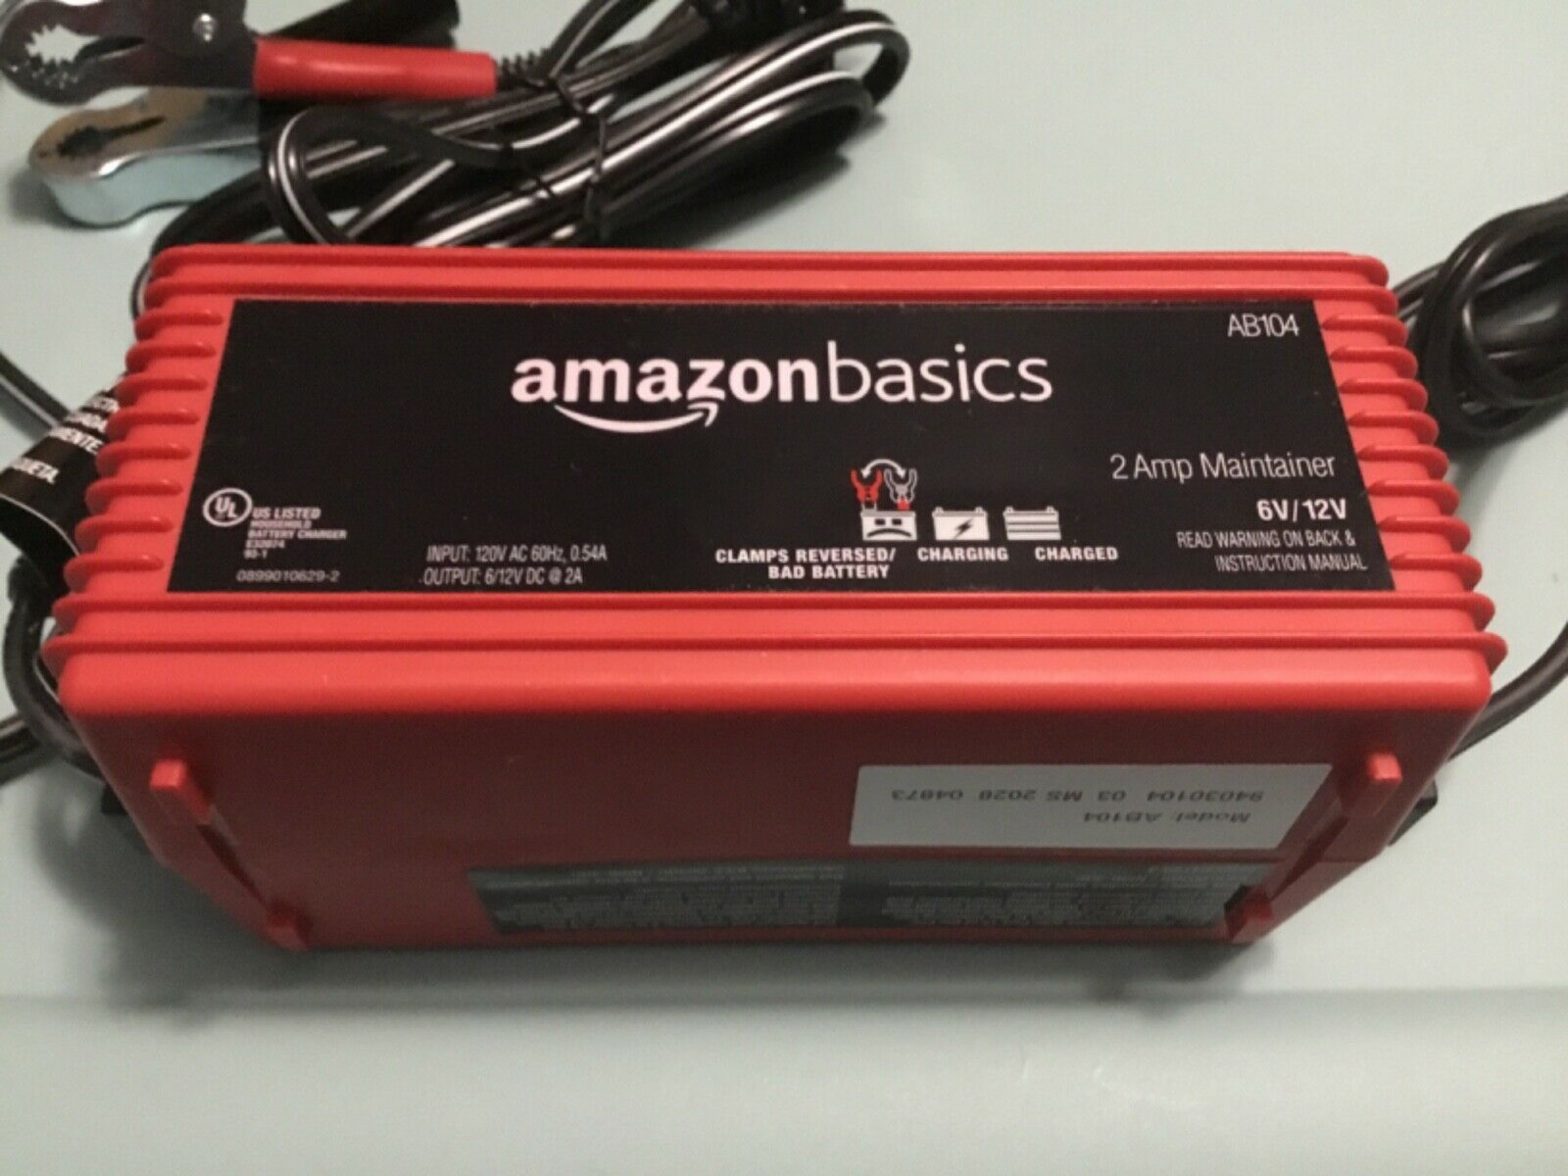 amazonbasics 12V Battery Charger User Manual